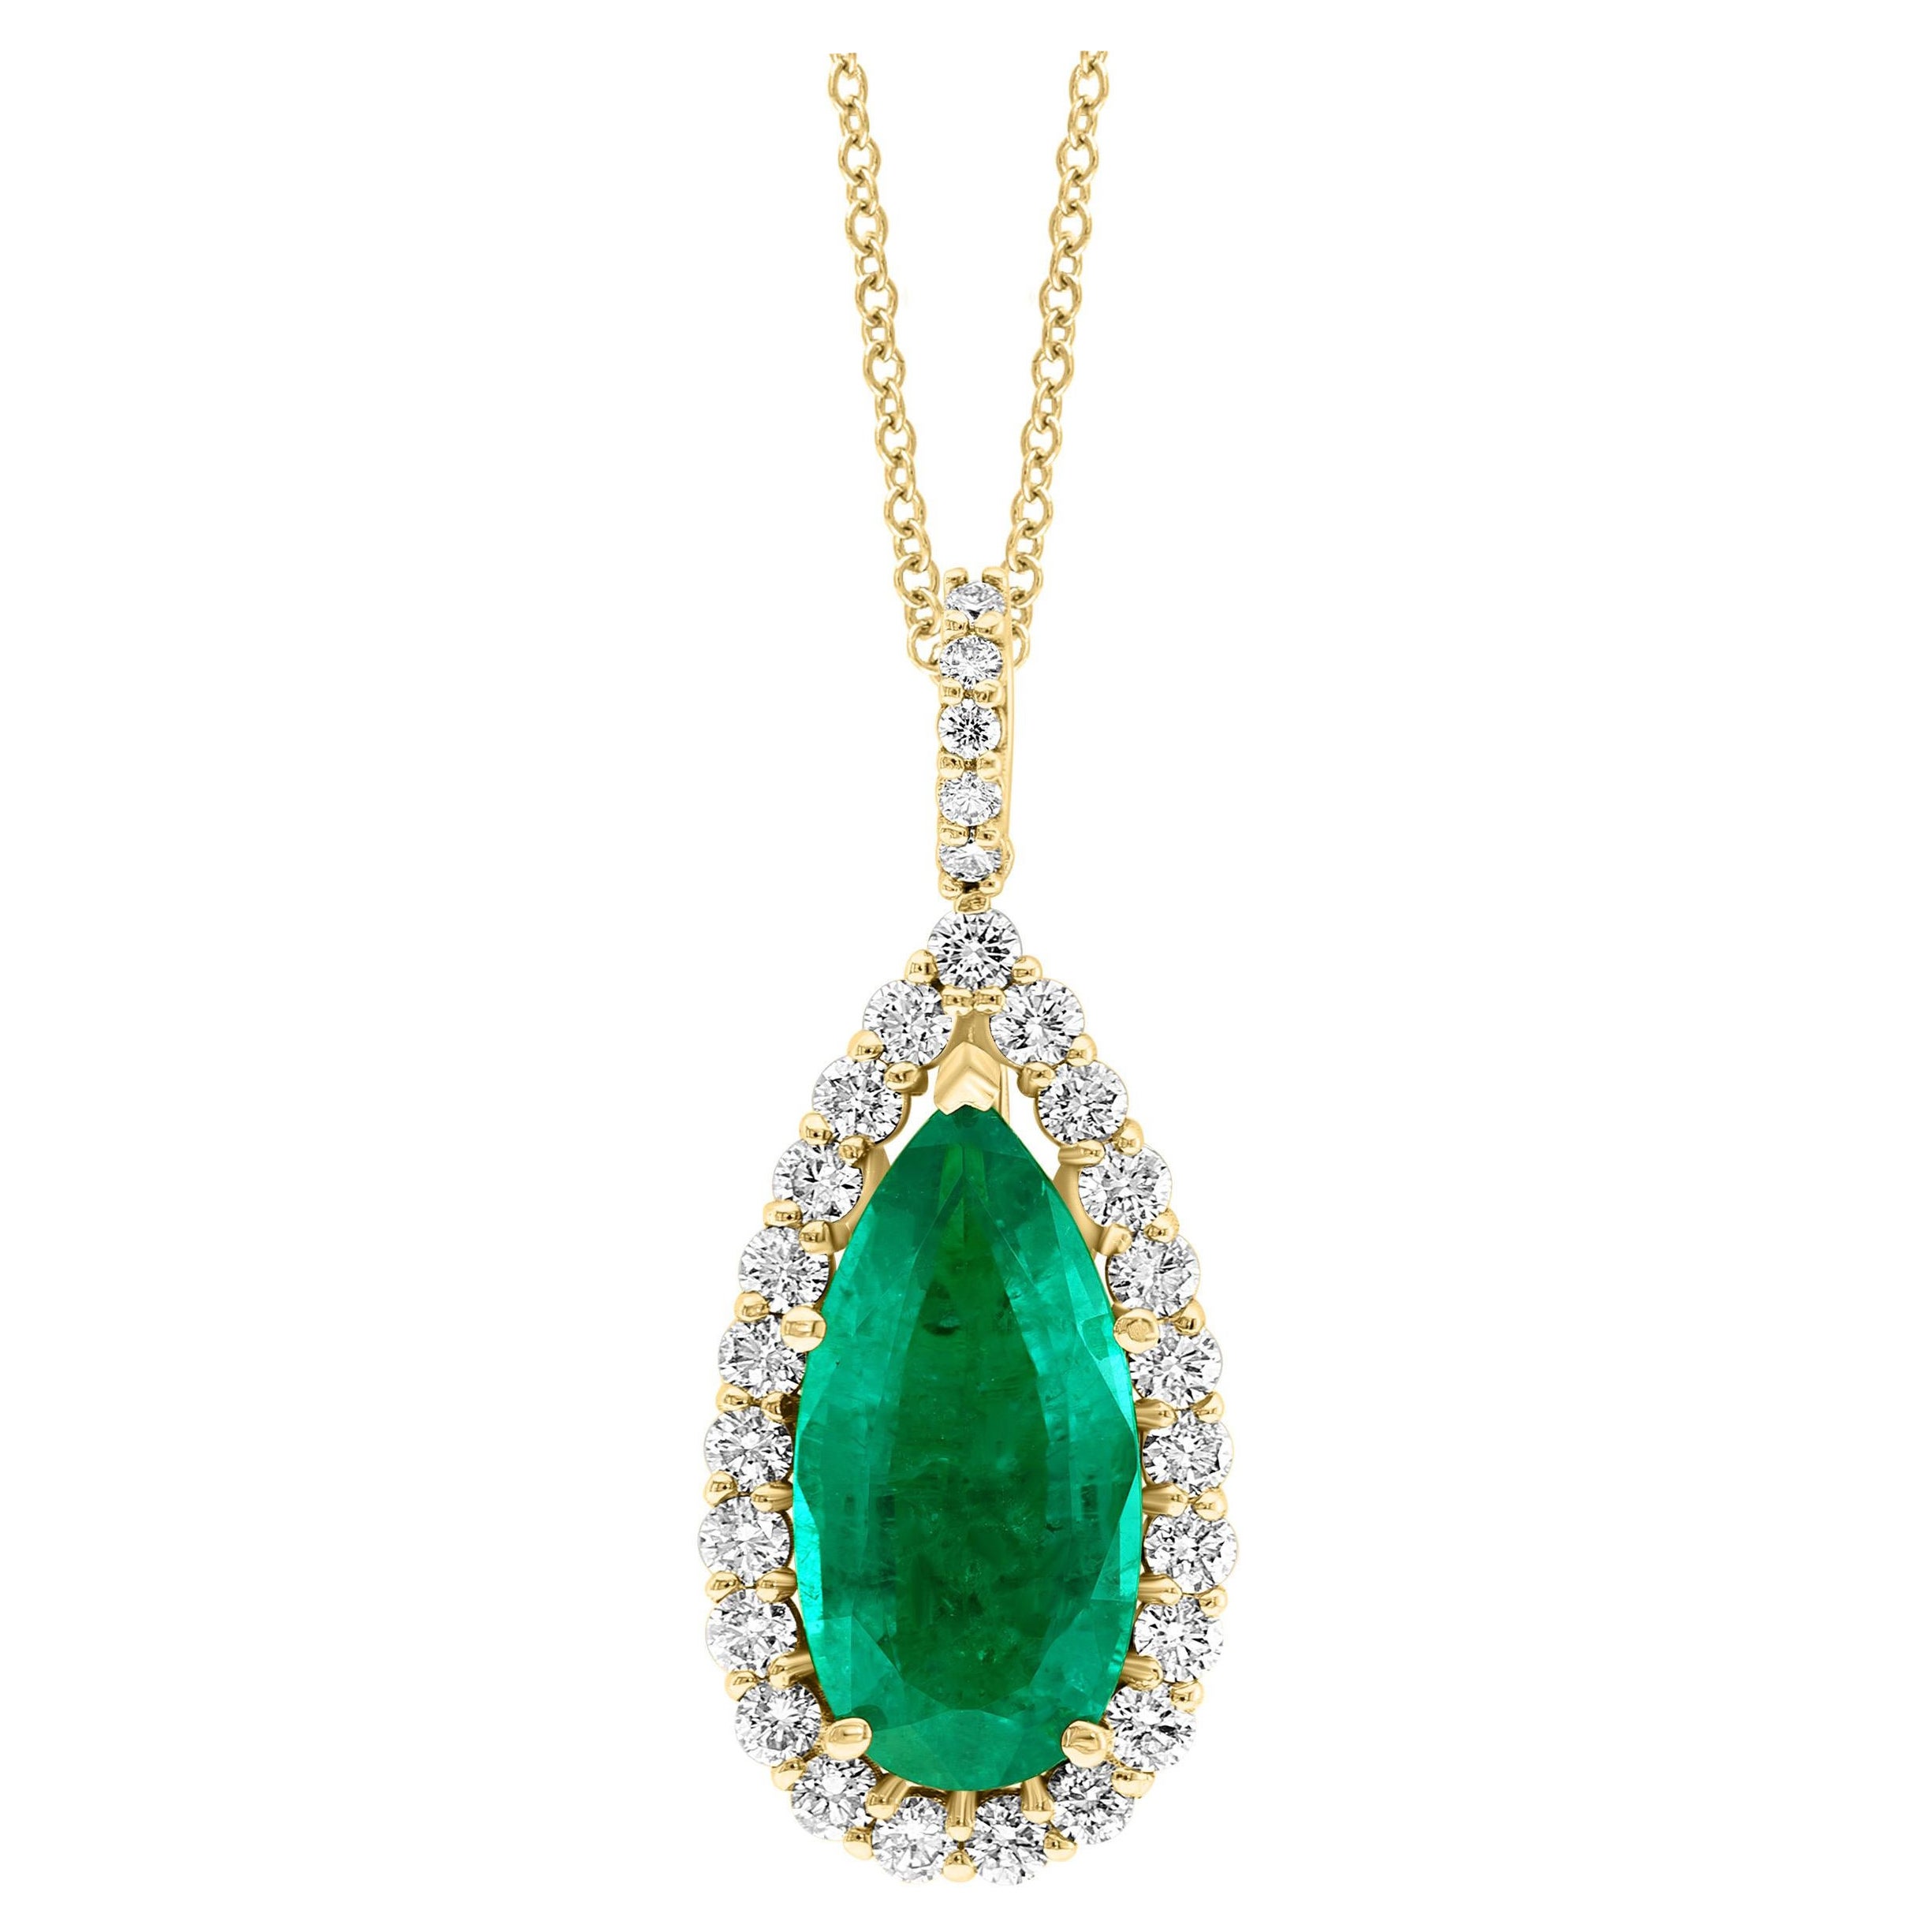 11 Carat Pear Shape Colombian Emerald and Diamond Pendant Necklace Enhancer